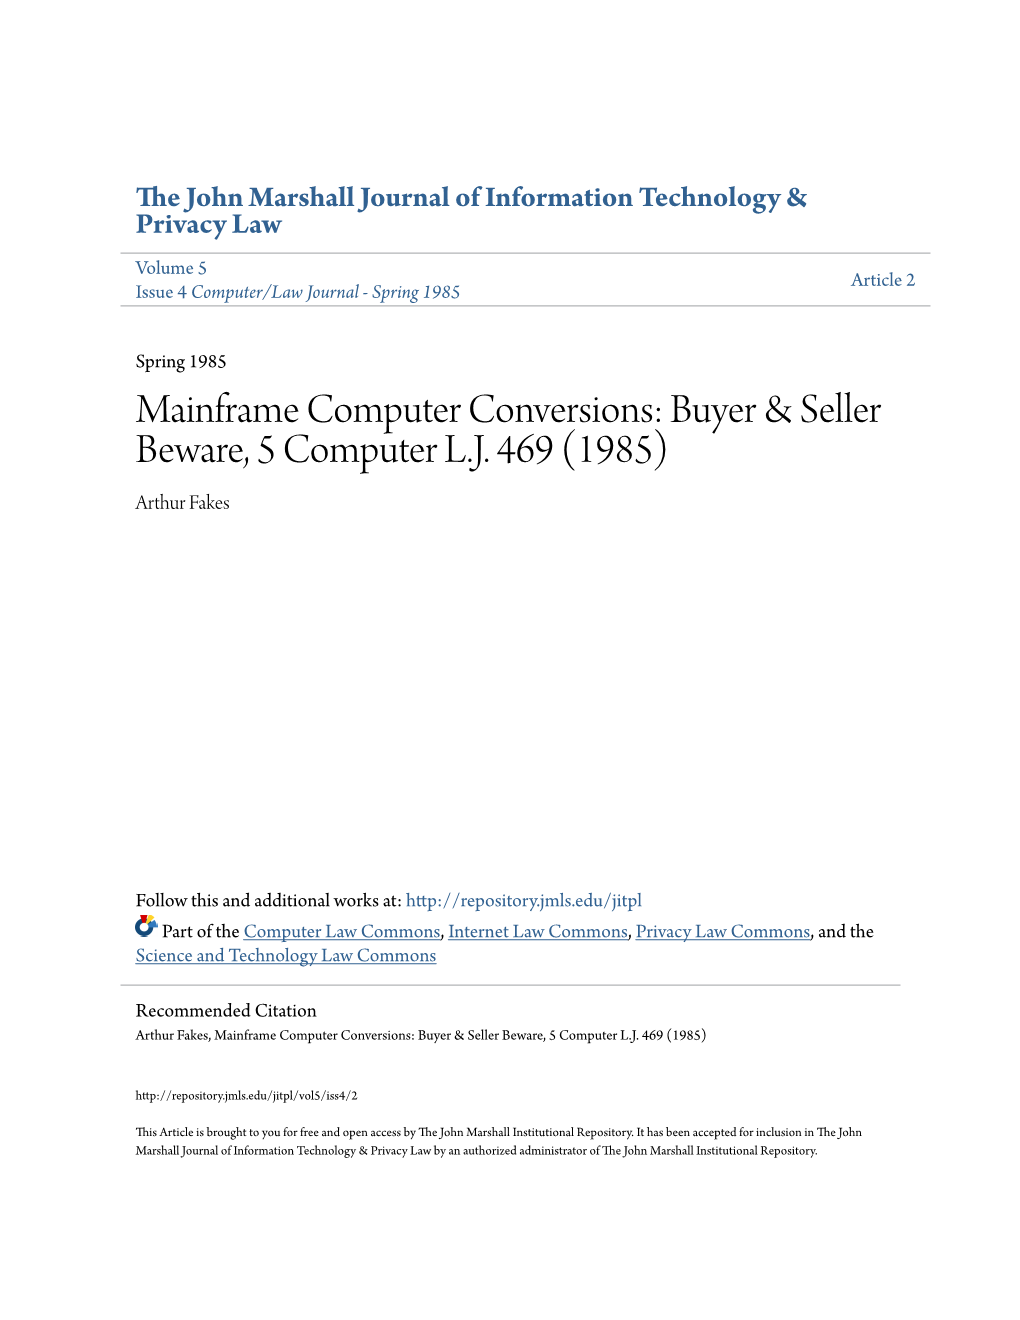 Mainframe Computer Conversions: Buyer & Seller Beware, 5 Computer L.J